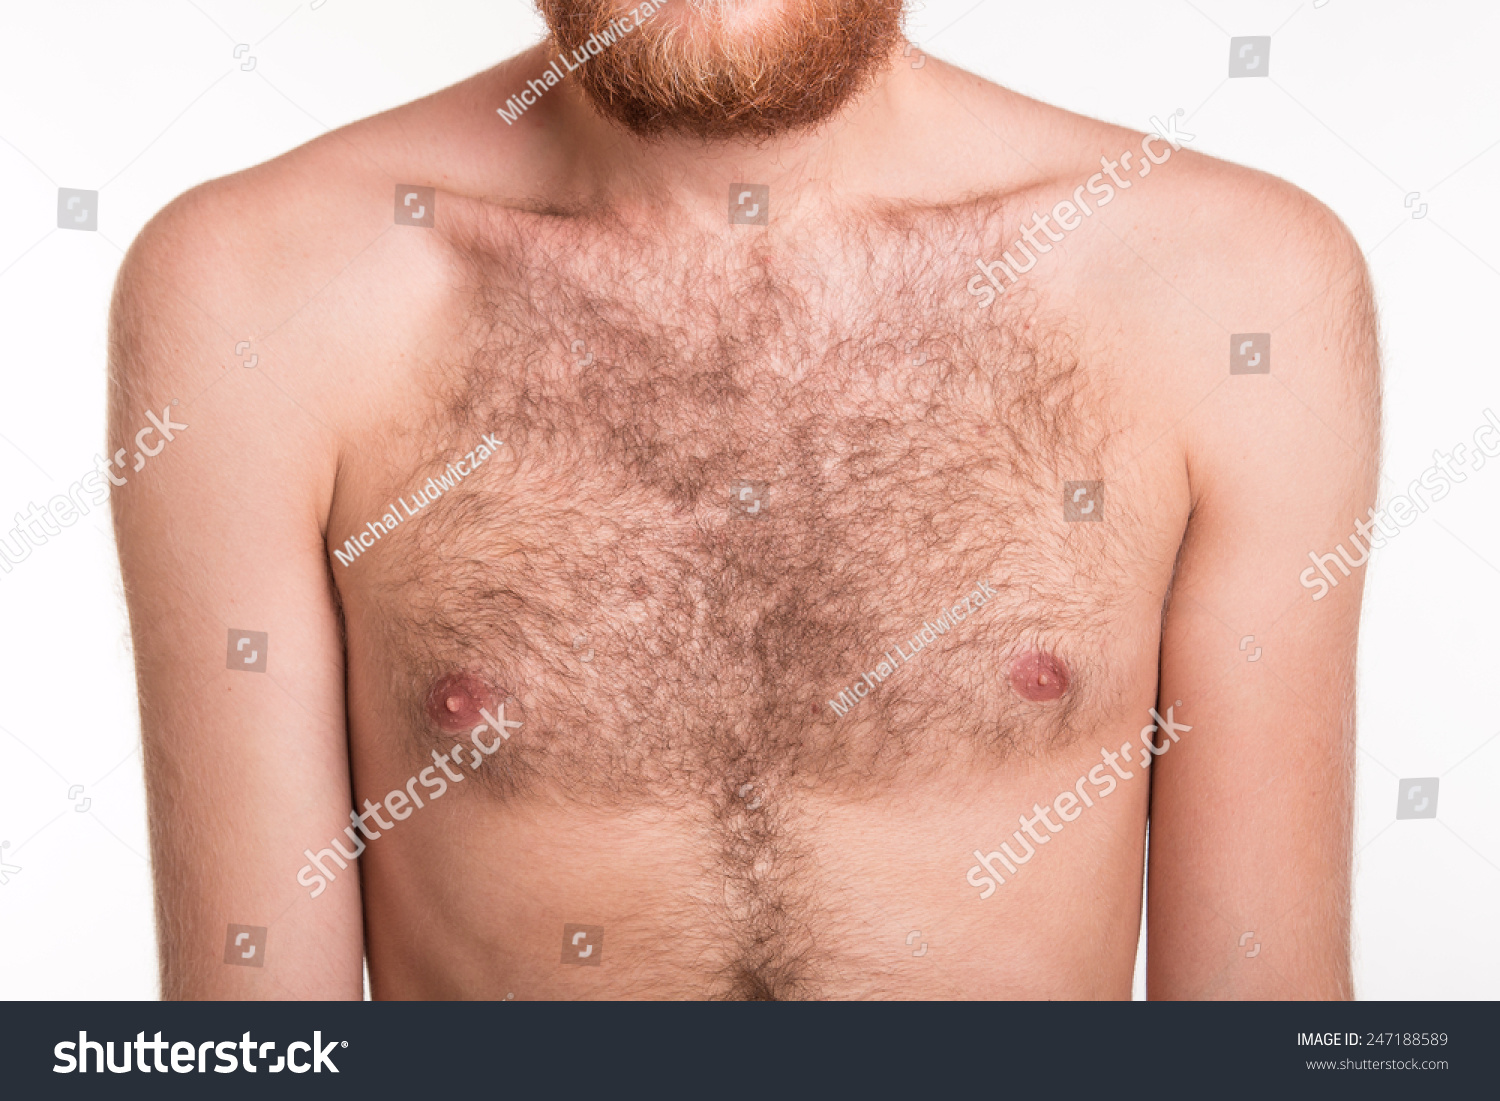 депиляция на груди для мужчин фото 99